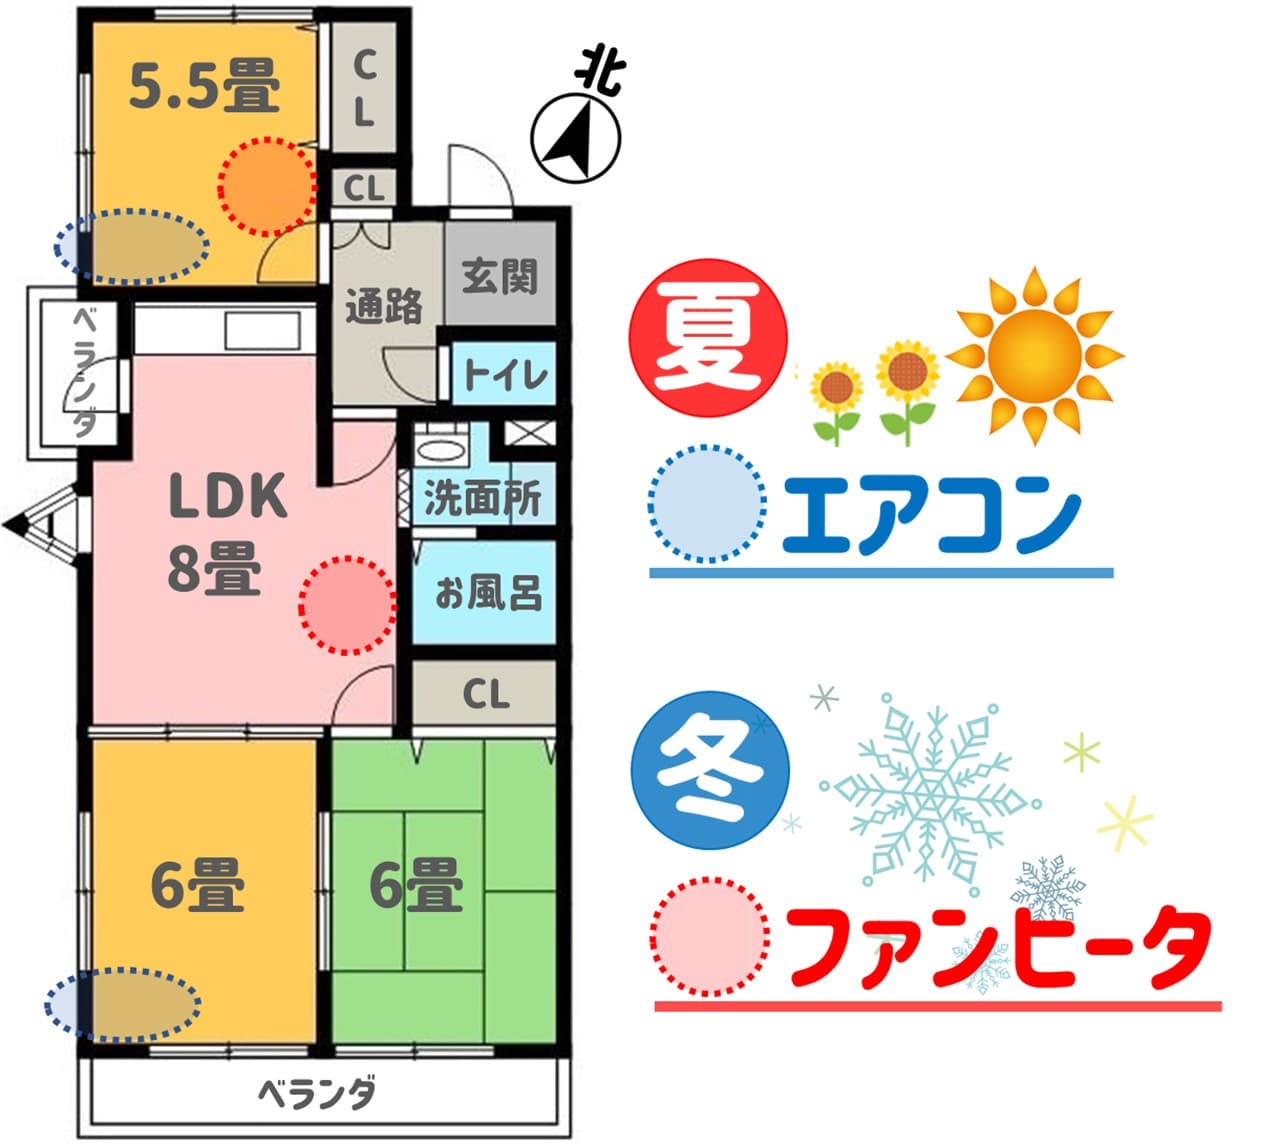 3LDK家族3人暮らしの夏冬の水道光熱費に影響する冷暖房の配置場所